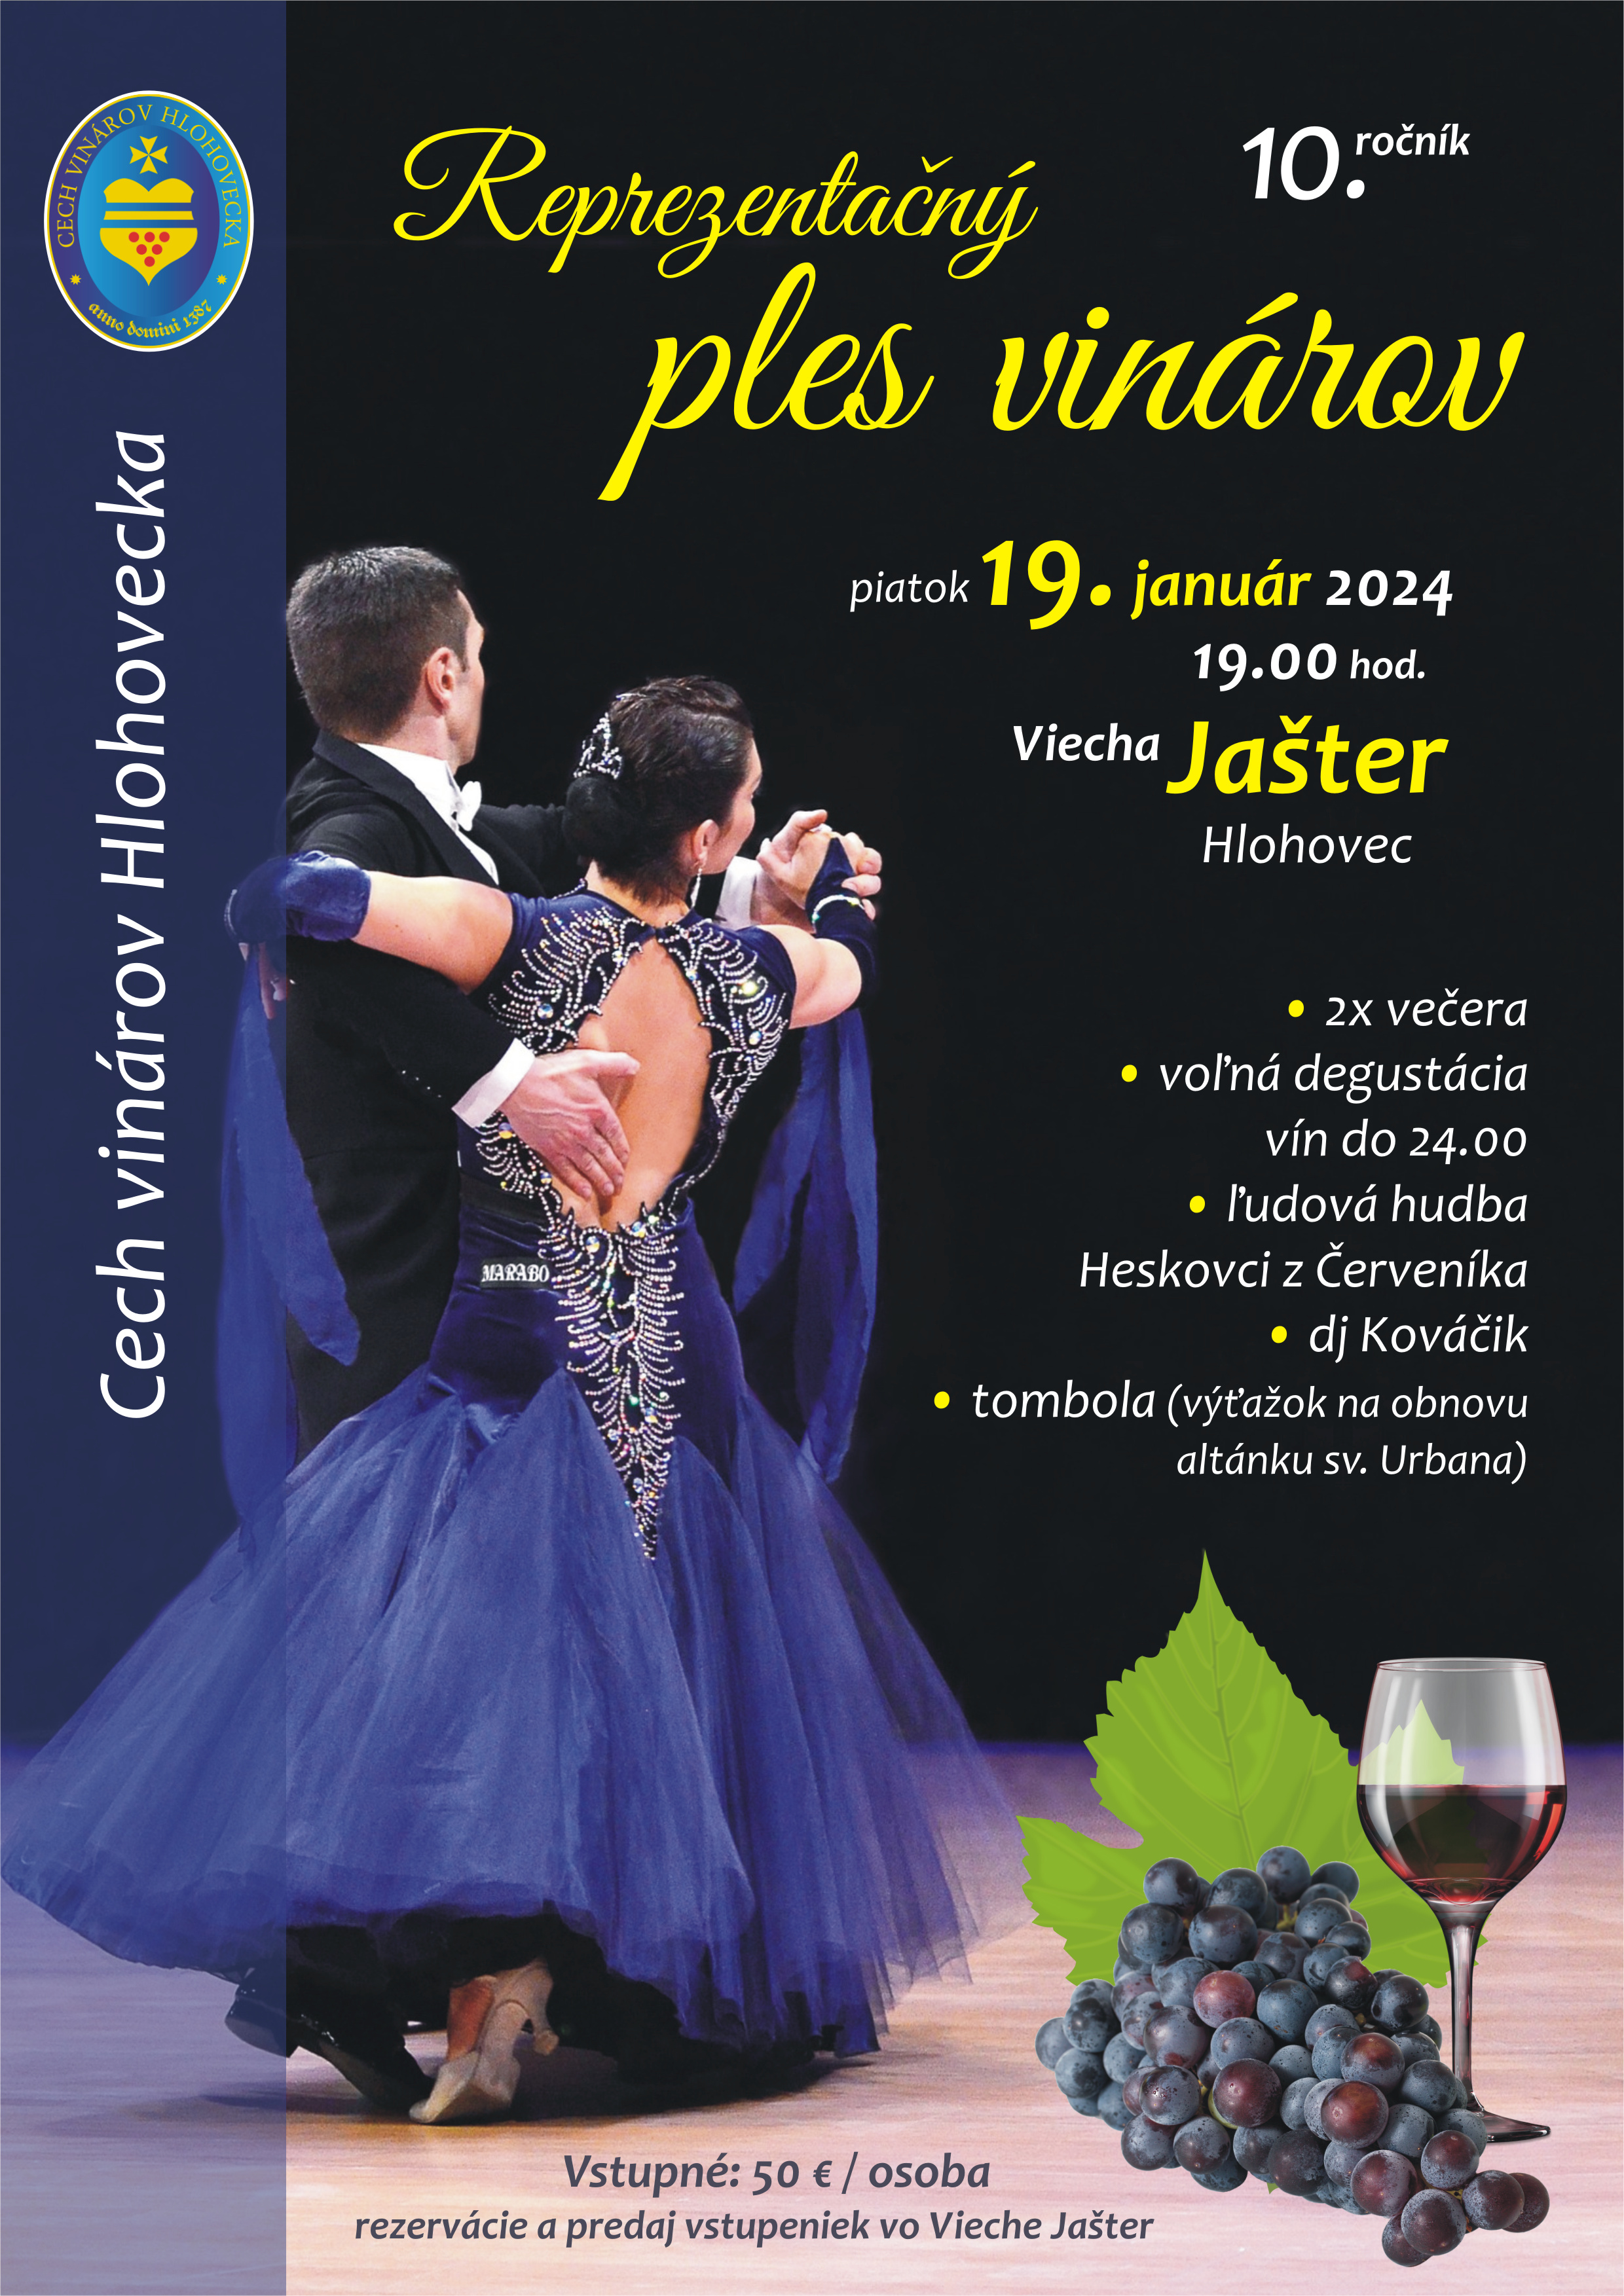 Reprezentan ples vinrov 2023 Hlohovec - 10. ronk